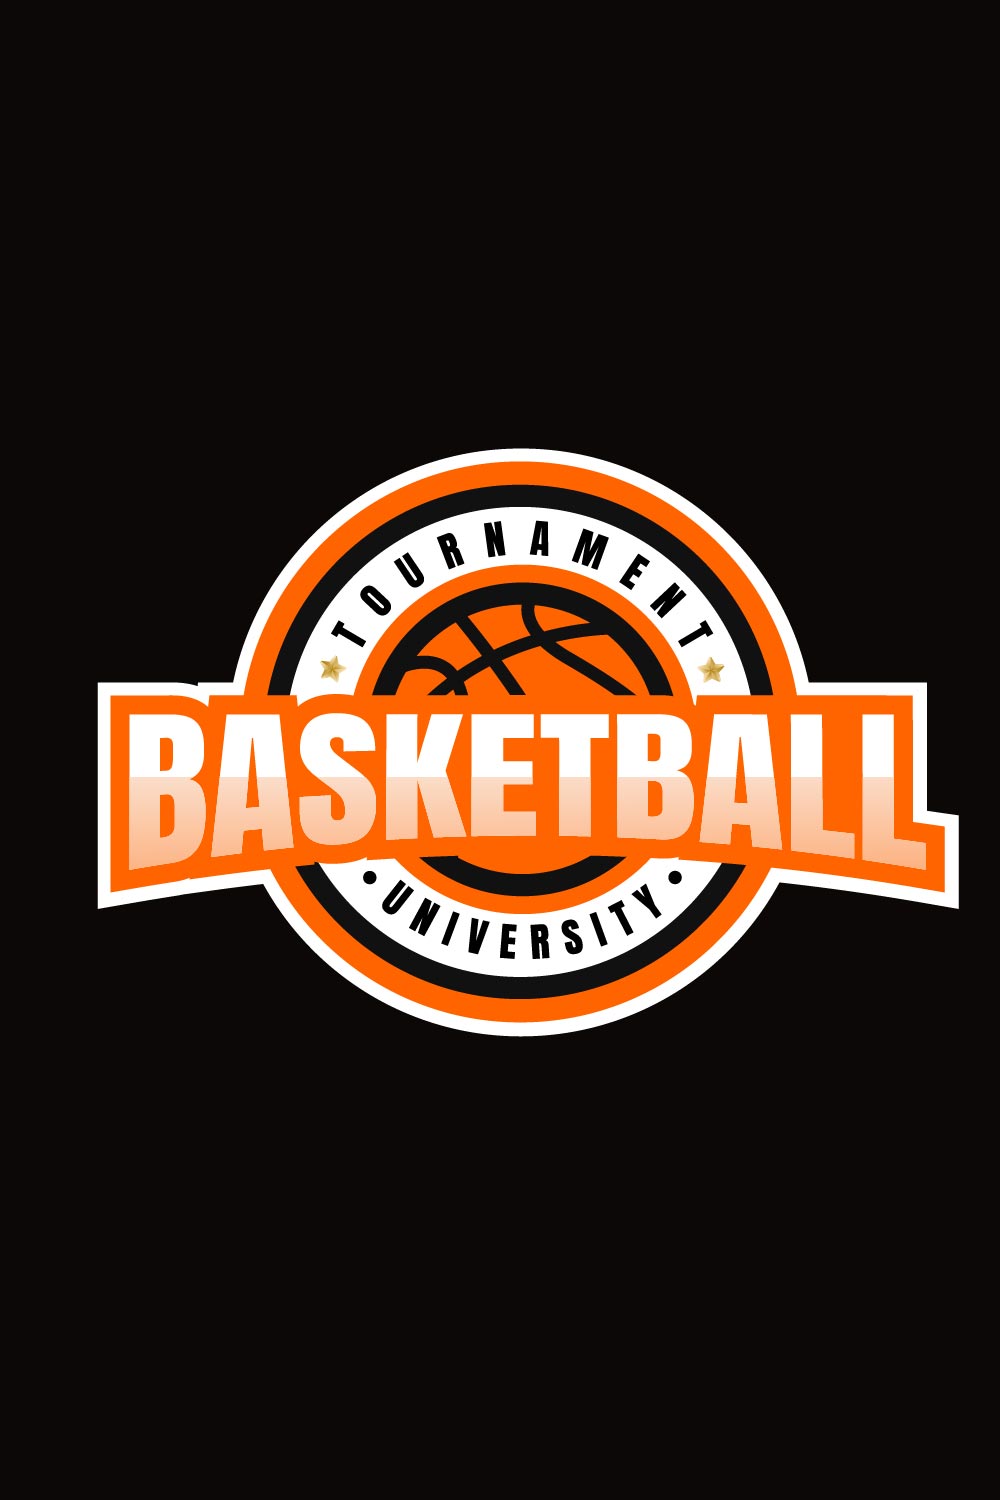 Logo Emblem of Basketball Competition Pinterest image.